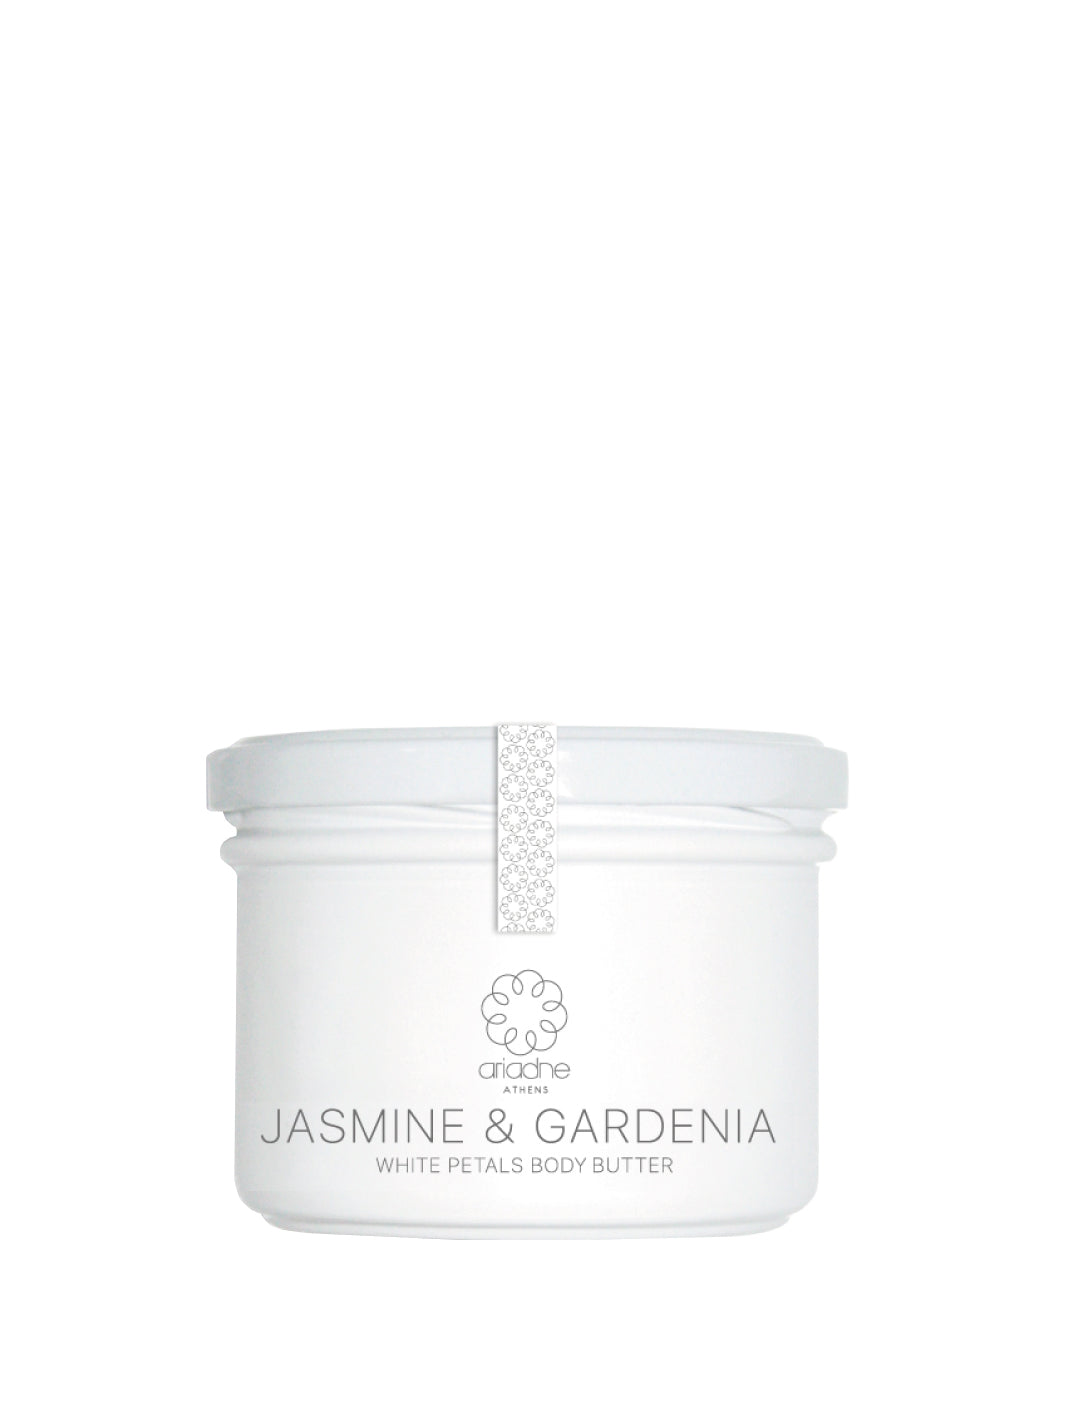 Jasmine & Gardenia White Petals Body Butter